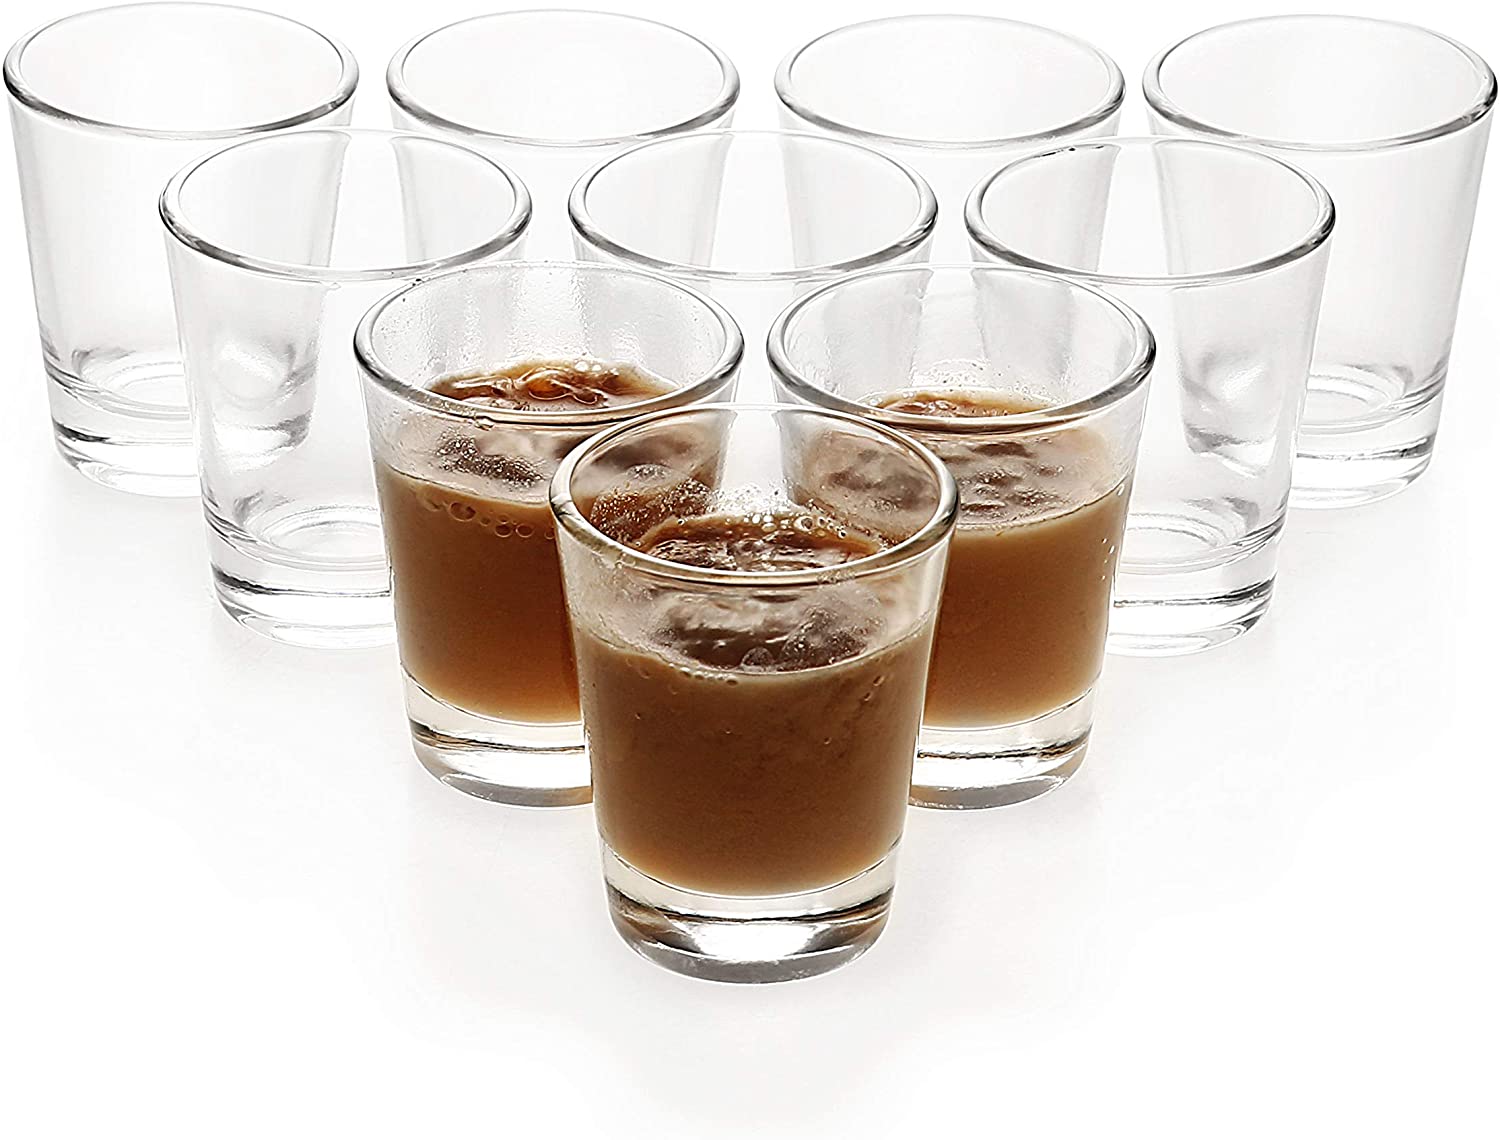 BCnmviku Dry And Liquid Shot Glasses, 10-Piece